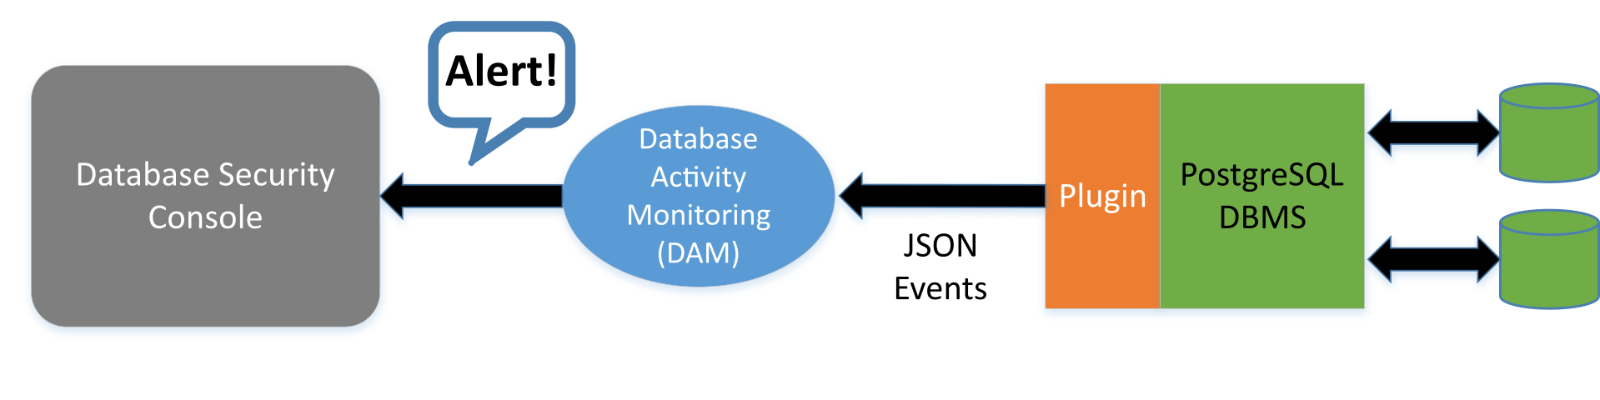 Fluxograma do fluxo de dados do banco de dado SQL para a DAM por meio do plug-in